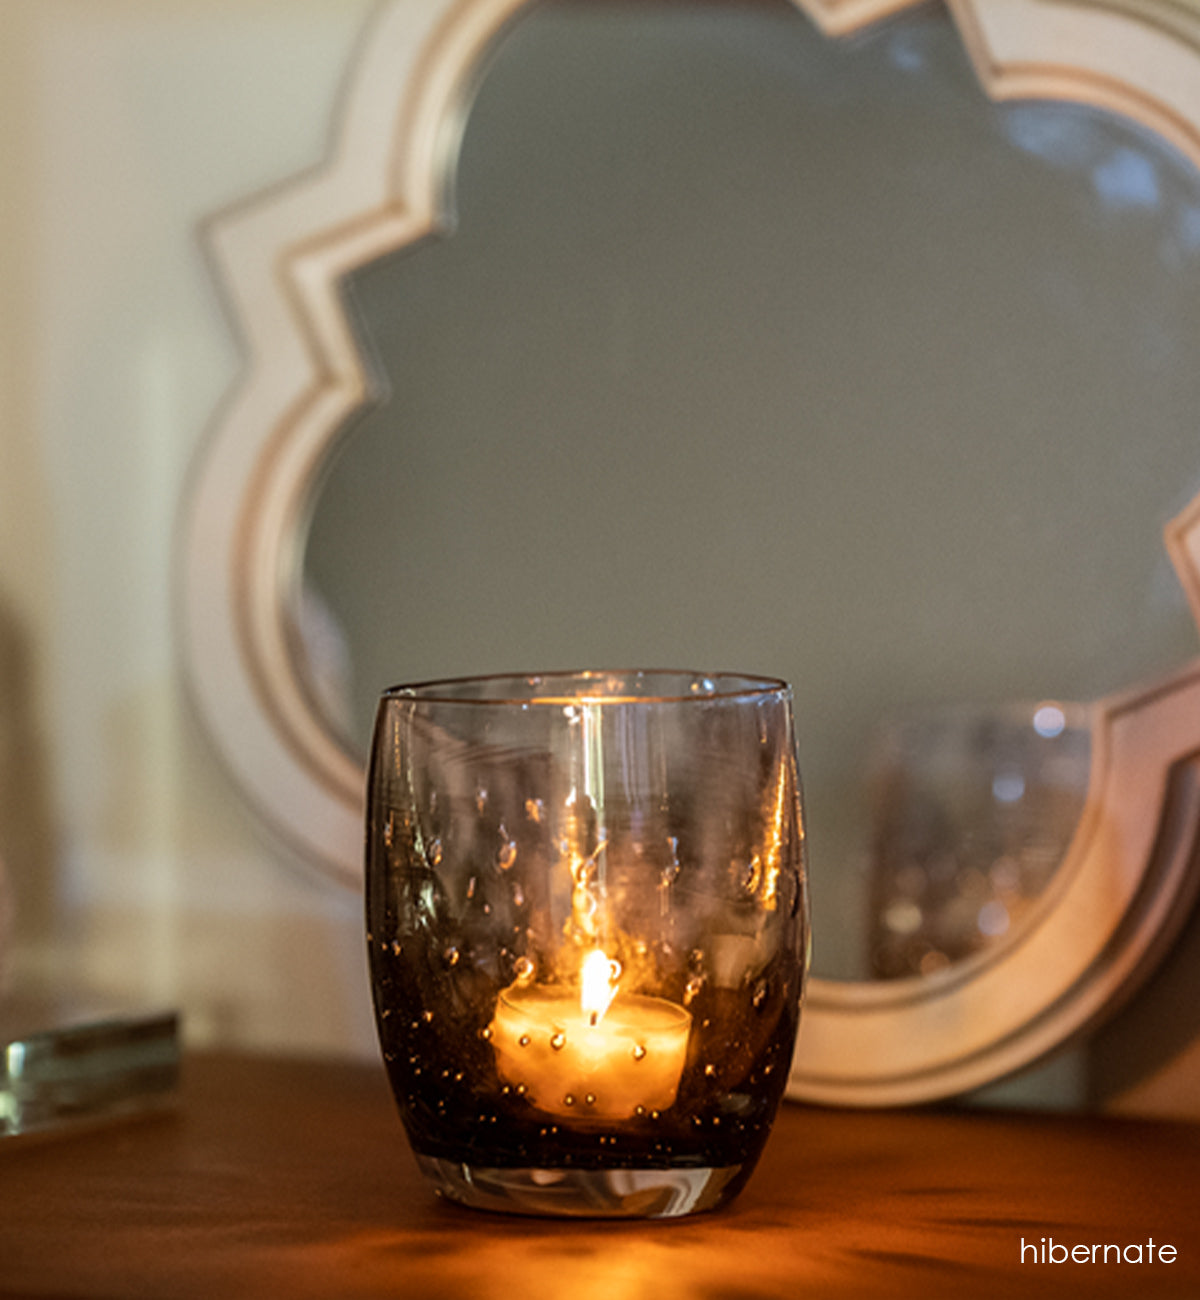 hibernate smokey grey bubble, hand-blown glass votive candle holder